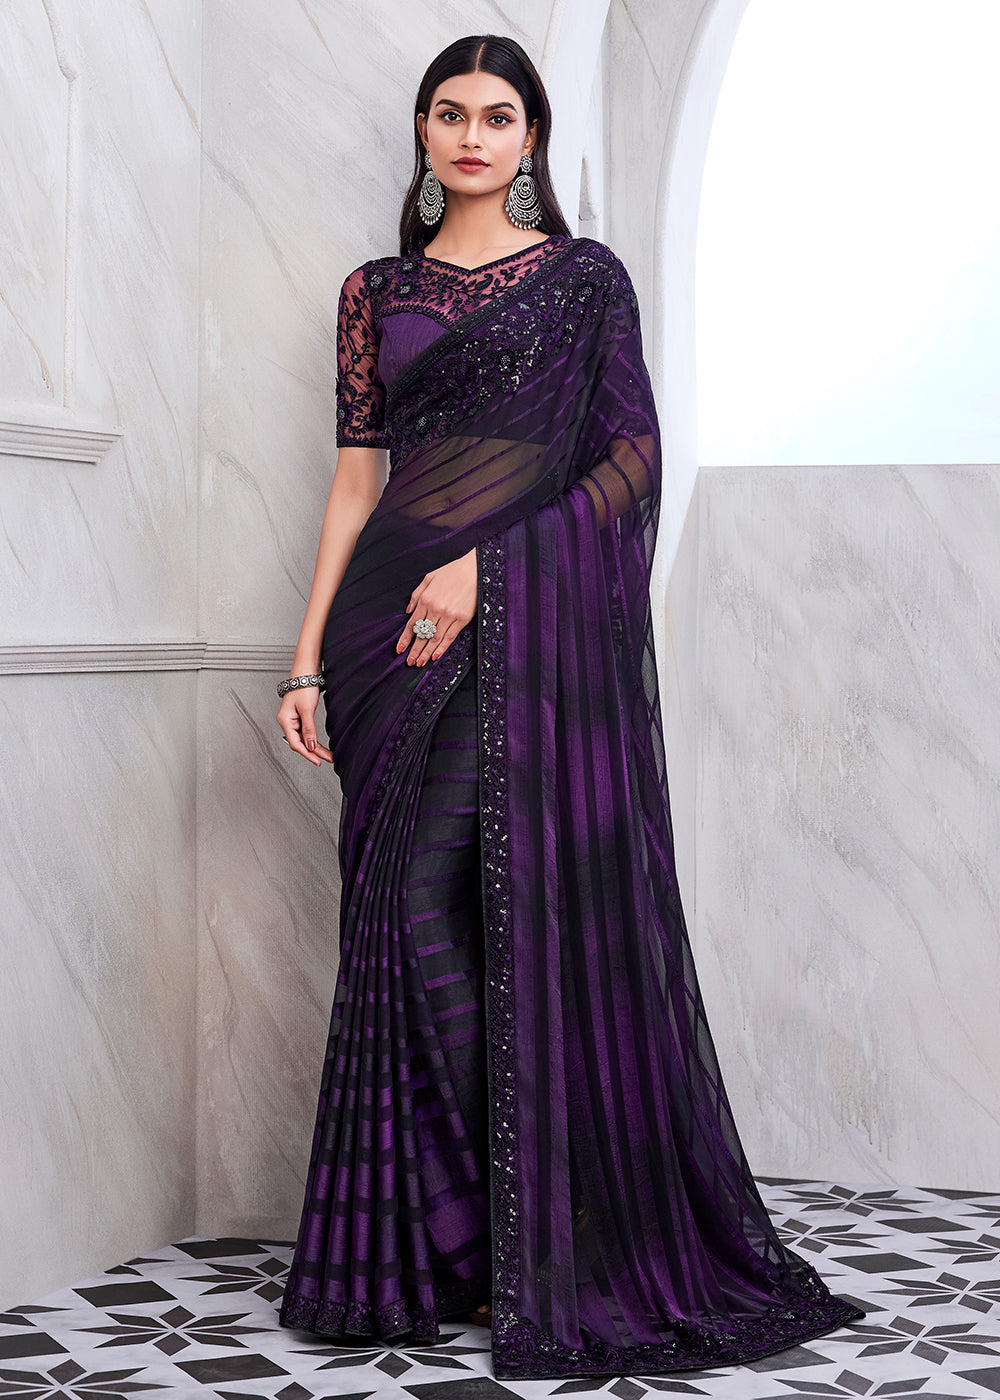 Buy Now Lovely Dark Purple Silk Embroidered Designer Saree Online in USA, UK, Canada & Worldwide at Empress Clothing. 